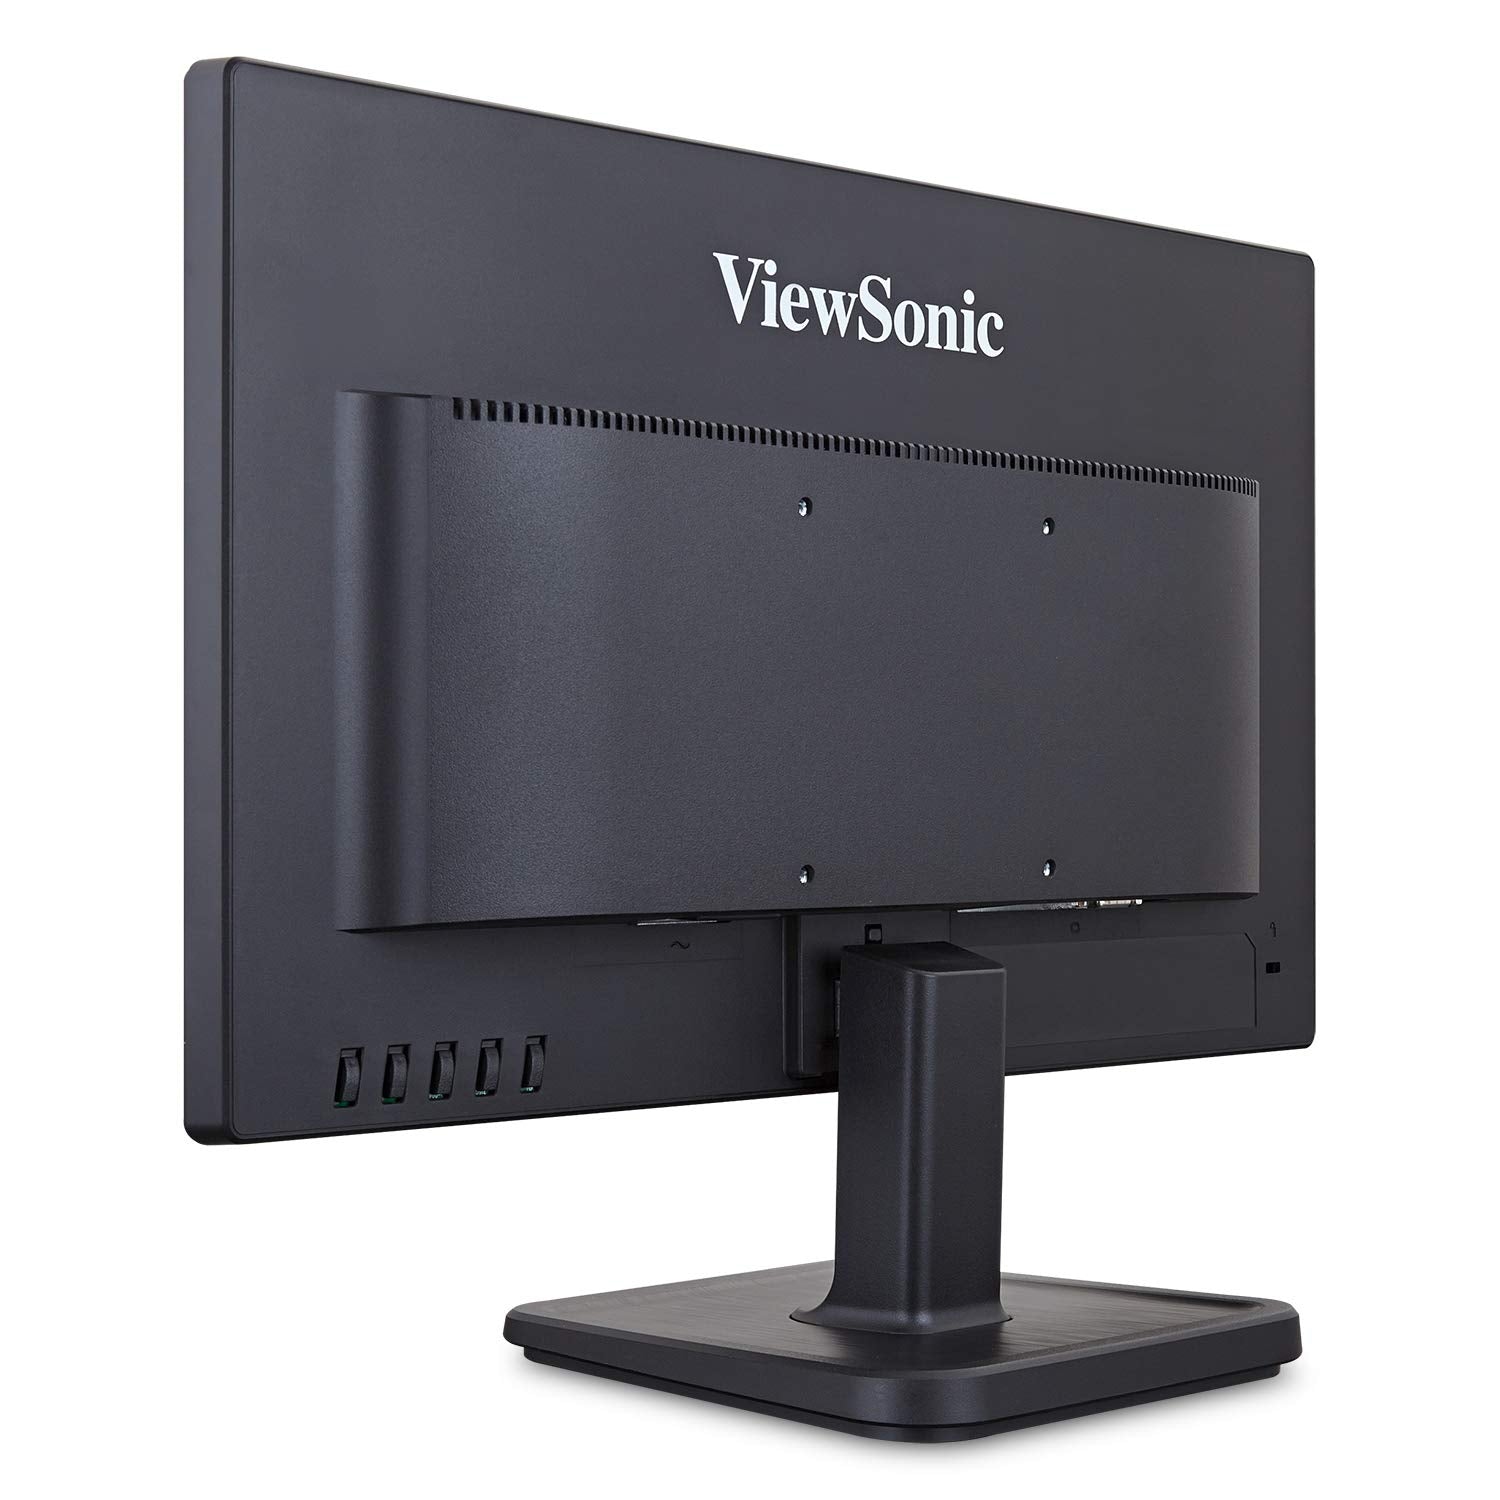 ViewSonic VA1901-A-R 19" Widescreen LCD Monitor  - C Grade Refurbished